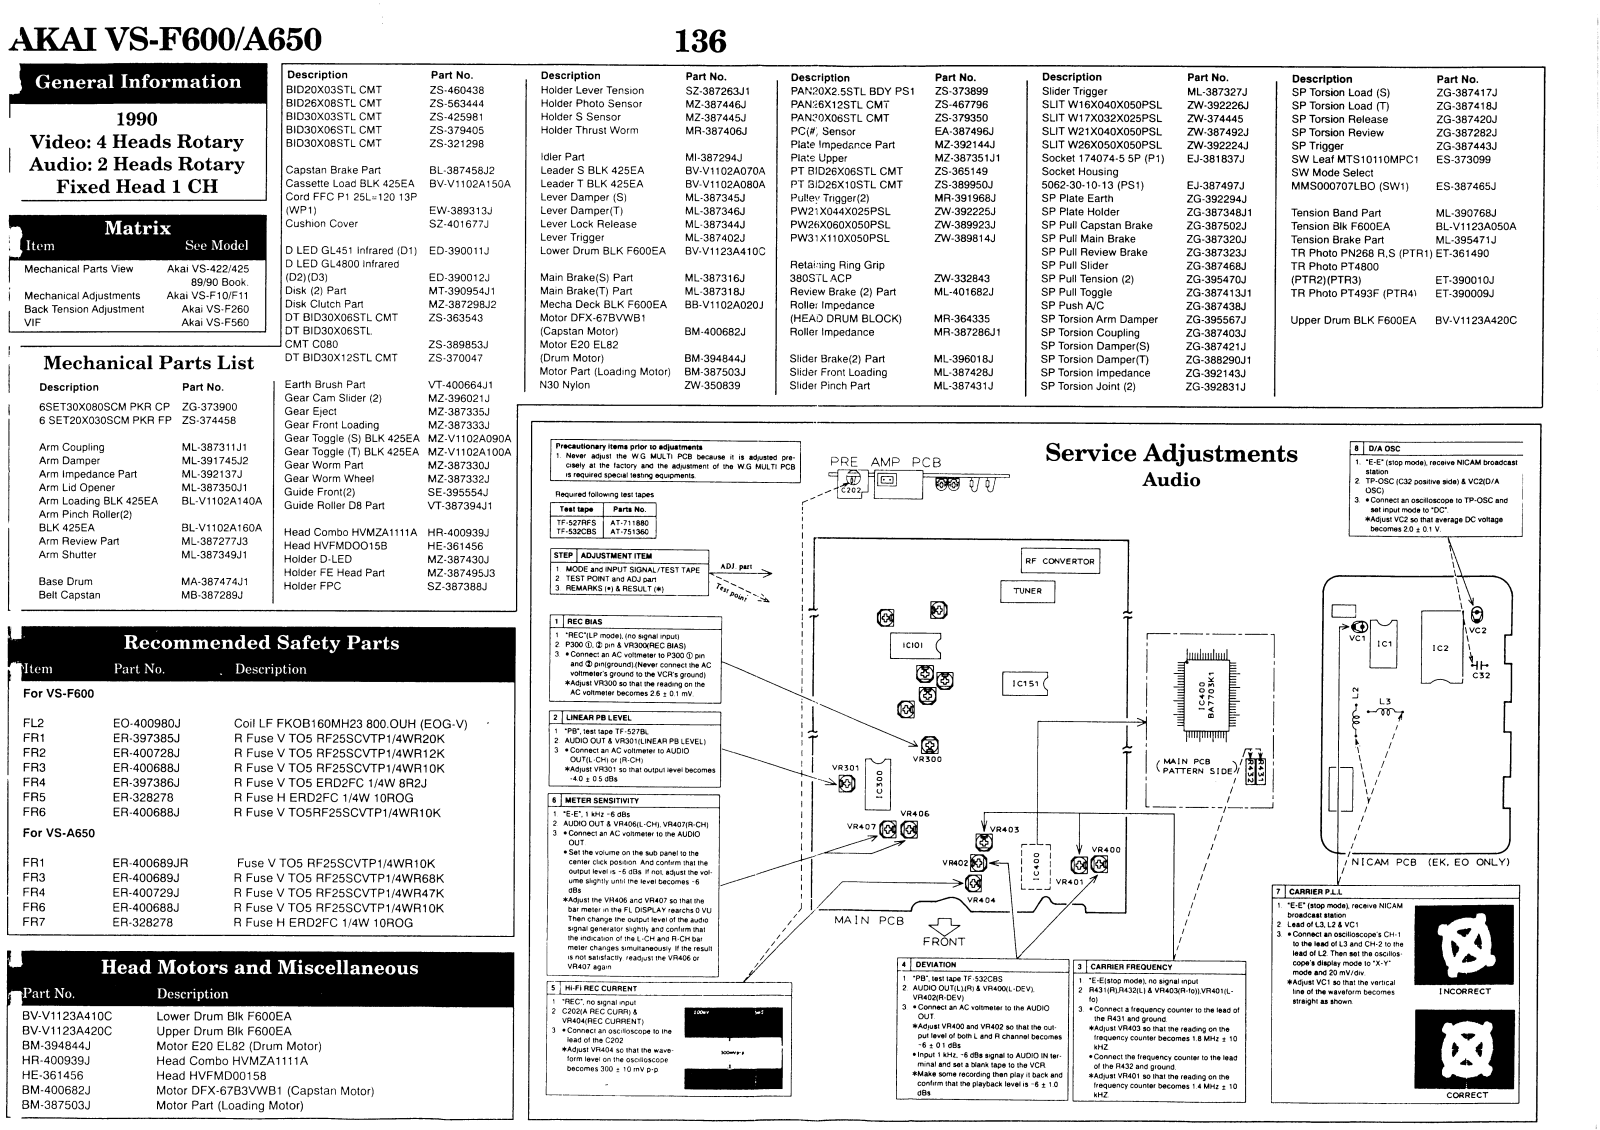 Akai VS-F650, VS-F600 Service Manual